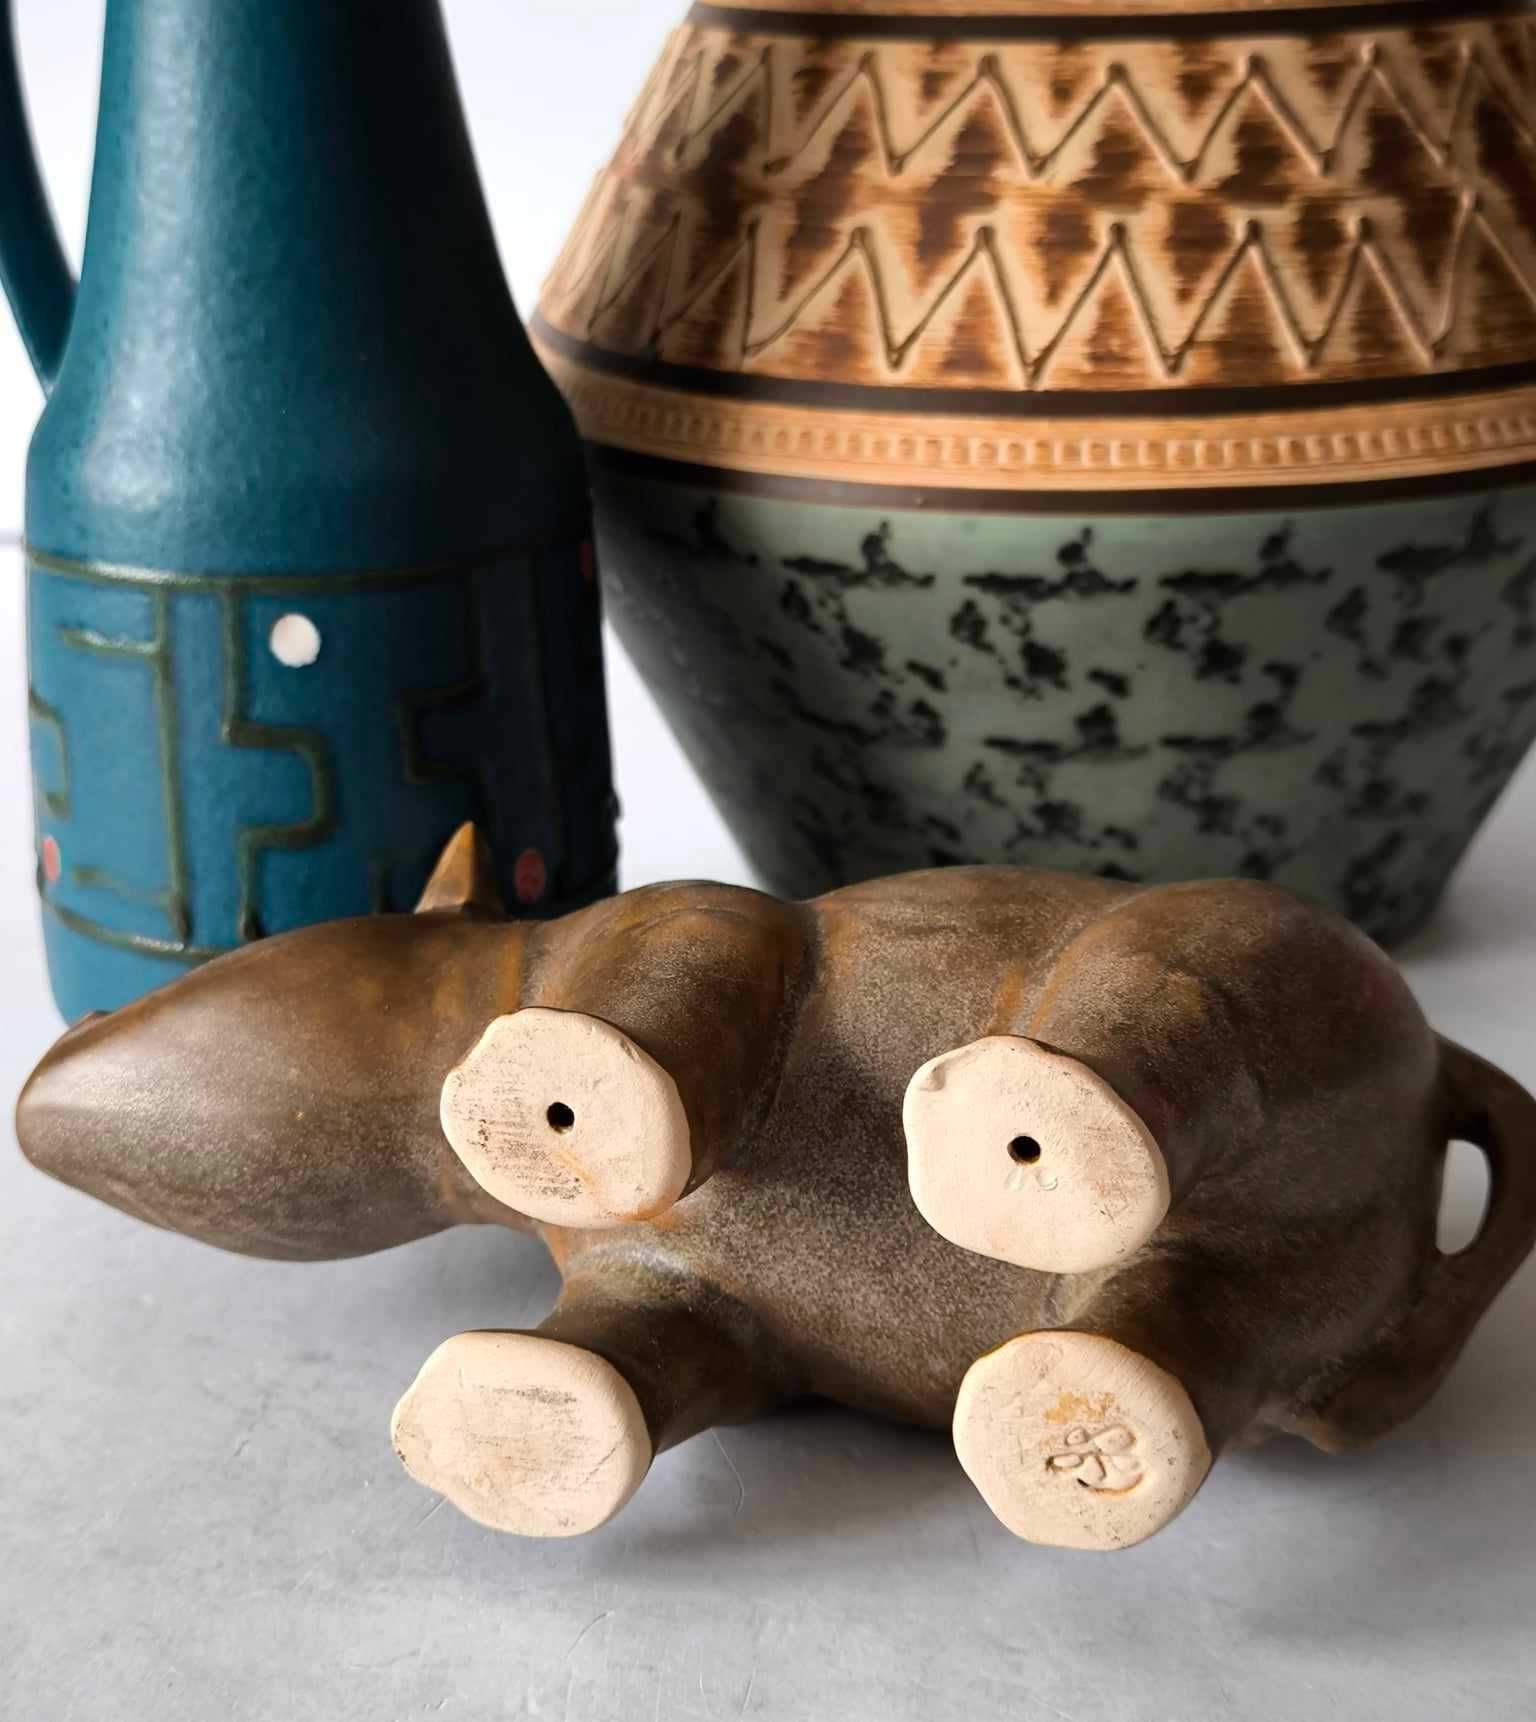 Stara ceramiczna figurka Nosorożec sygnowana Design Vintage